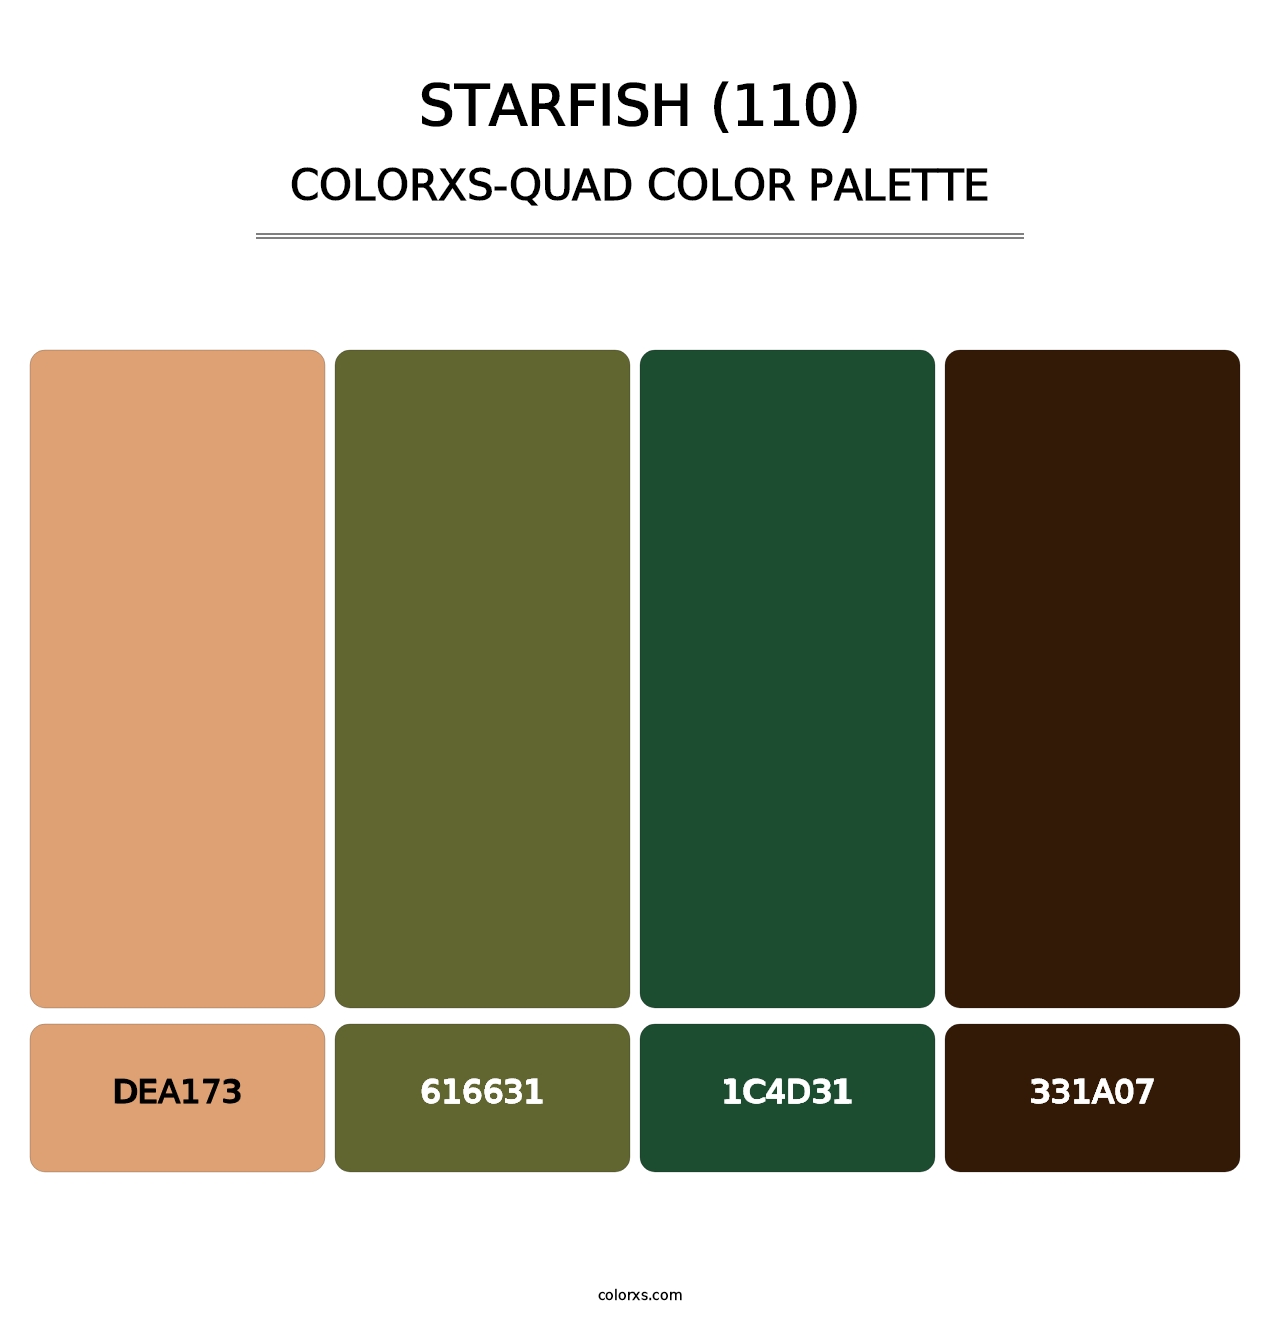 Starfish (110) - Colorxs Quad Palette